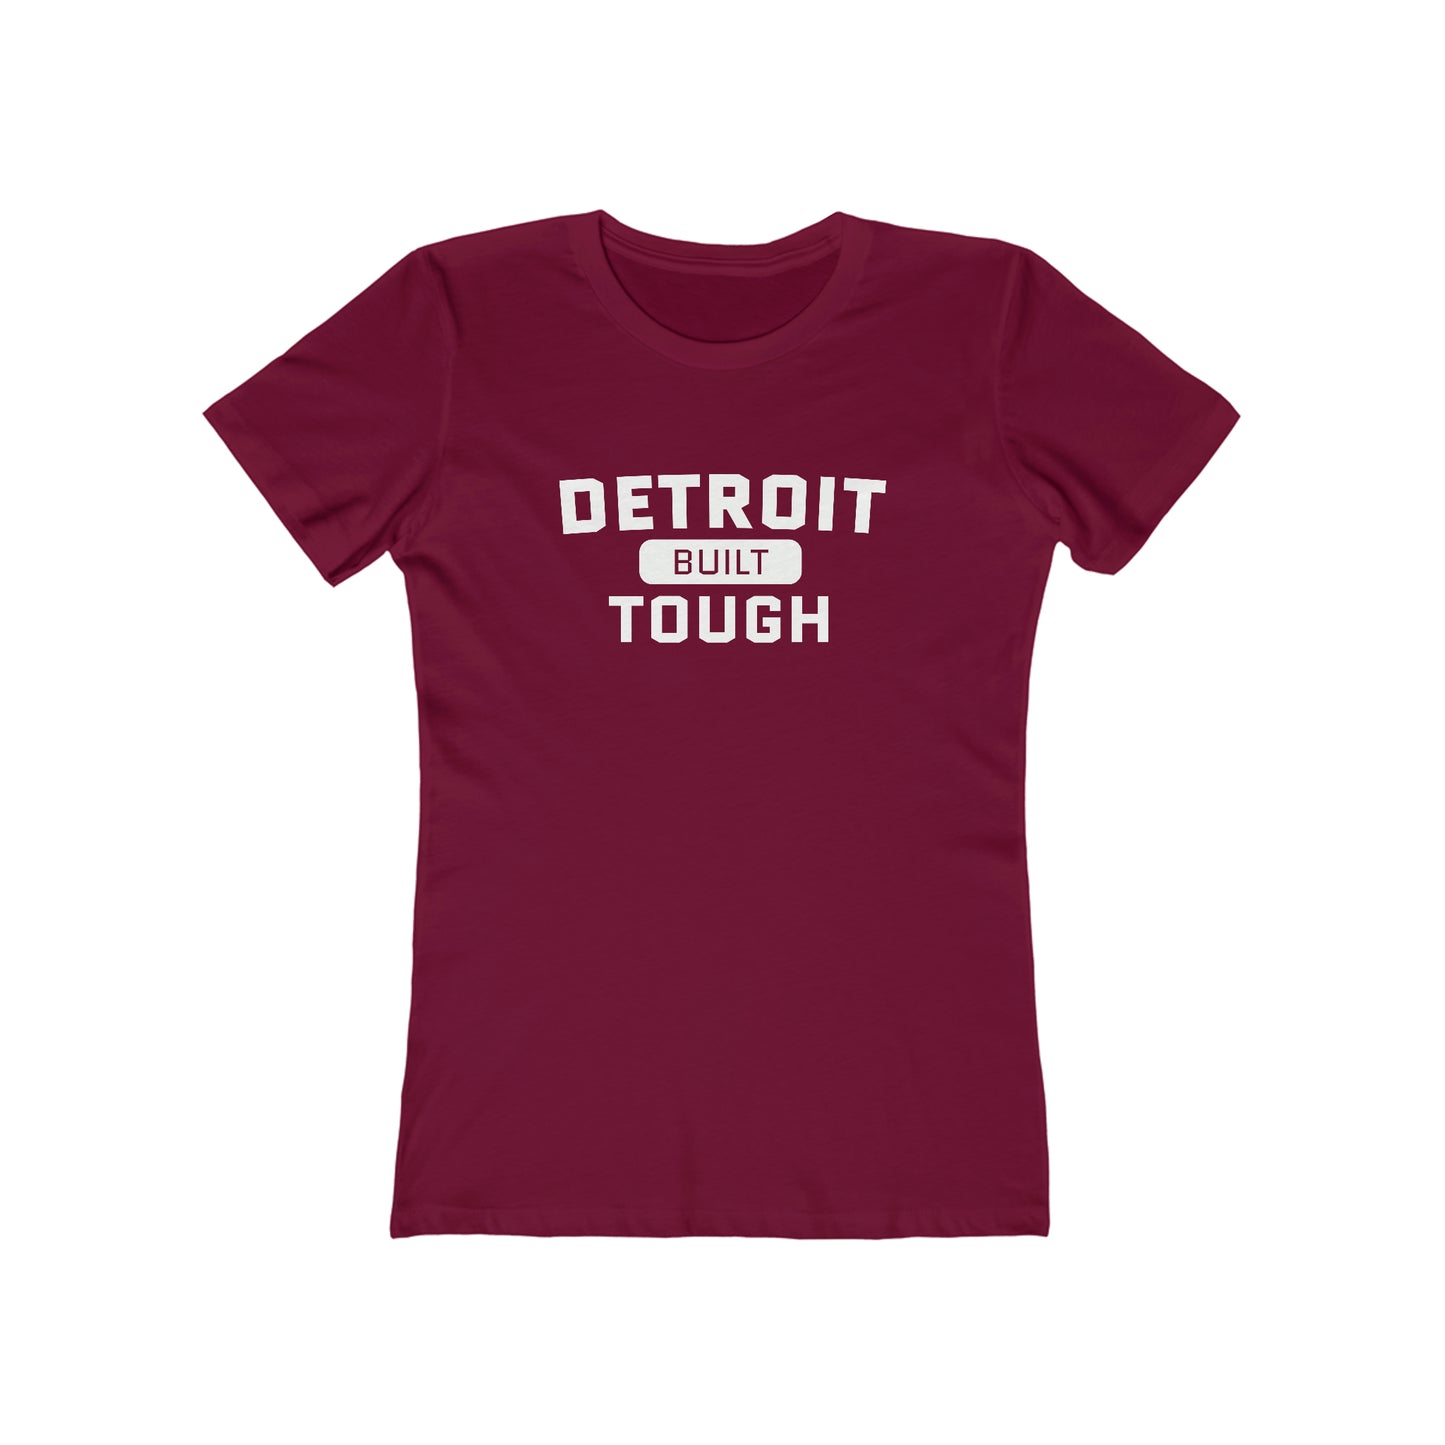 'Built Detroit Tough' T-Shirt | Women's Boyfriend Cut